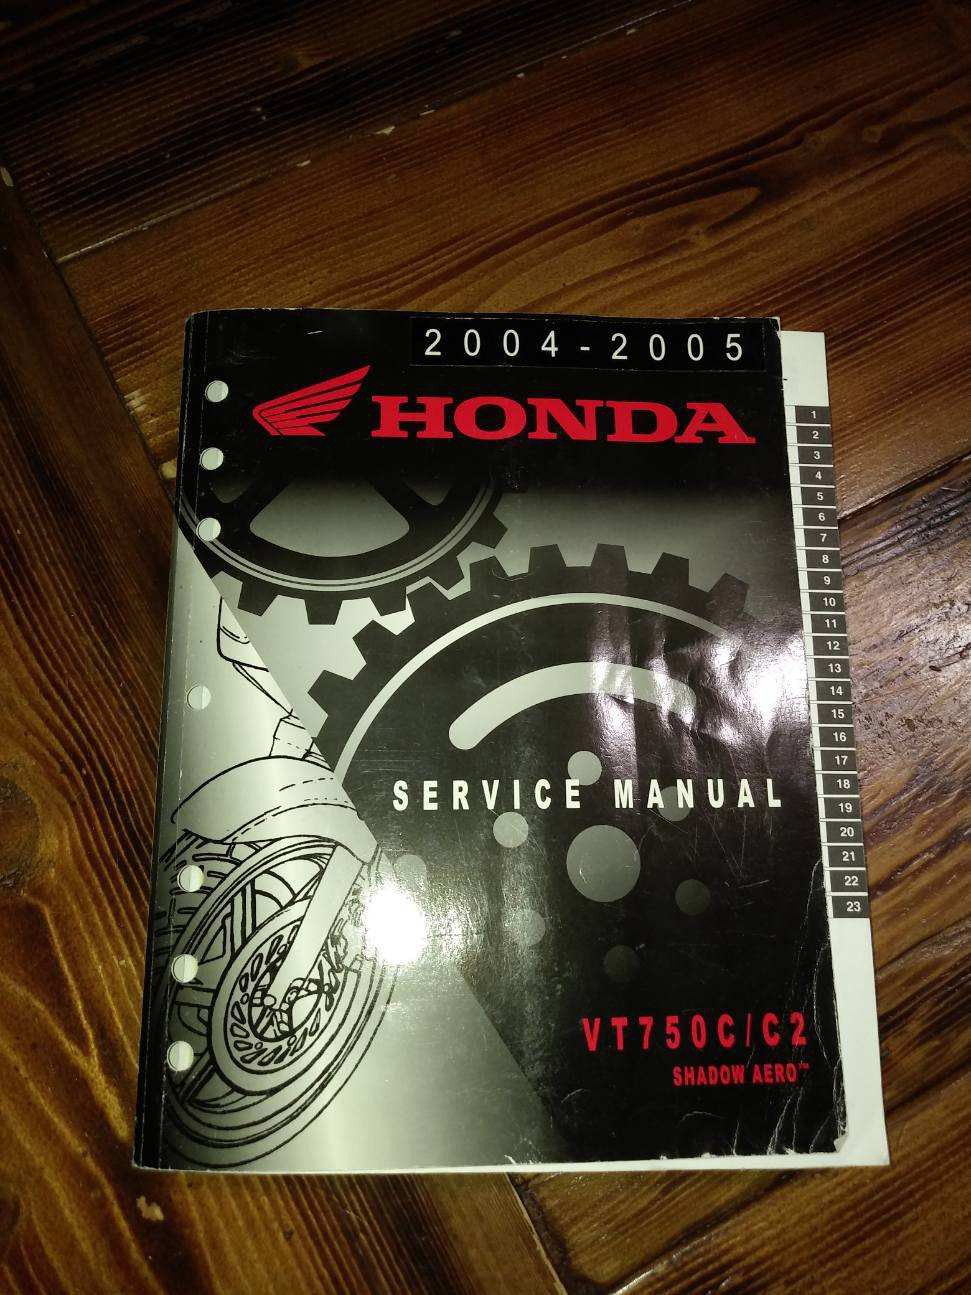 04-05 Honda Shadow Aero Service Manual VT750C